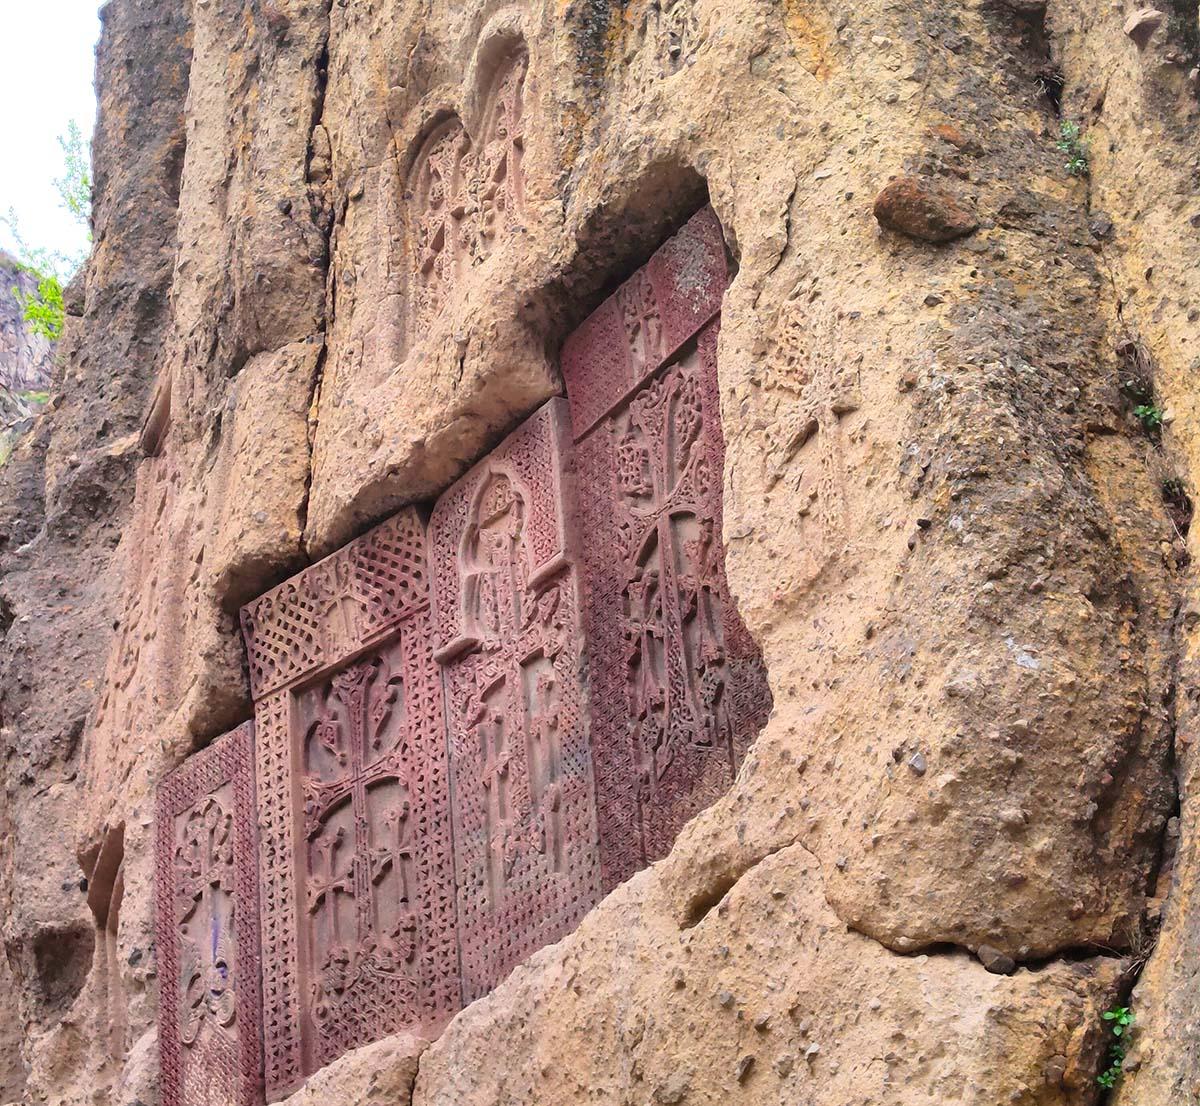 Cross stones carved into the rock. Photo by Vardan Papikyan